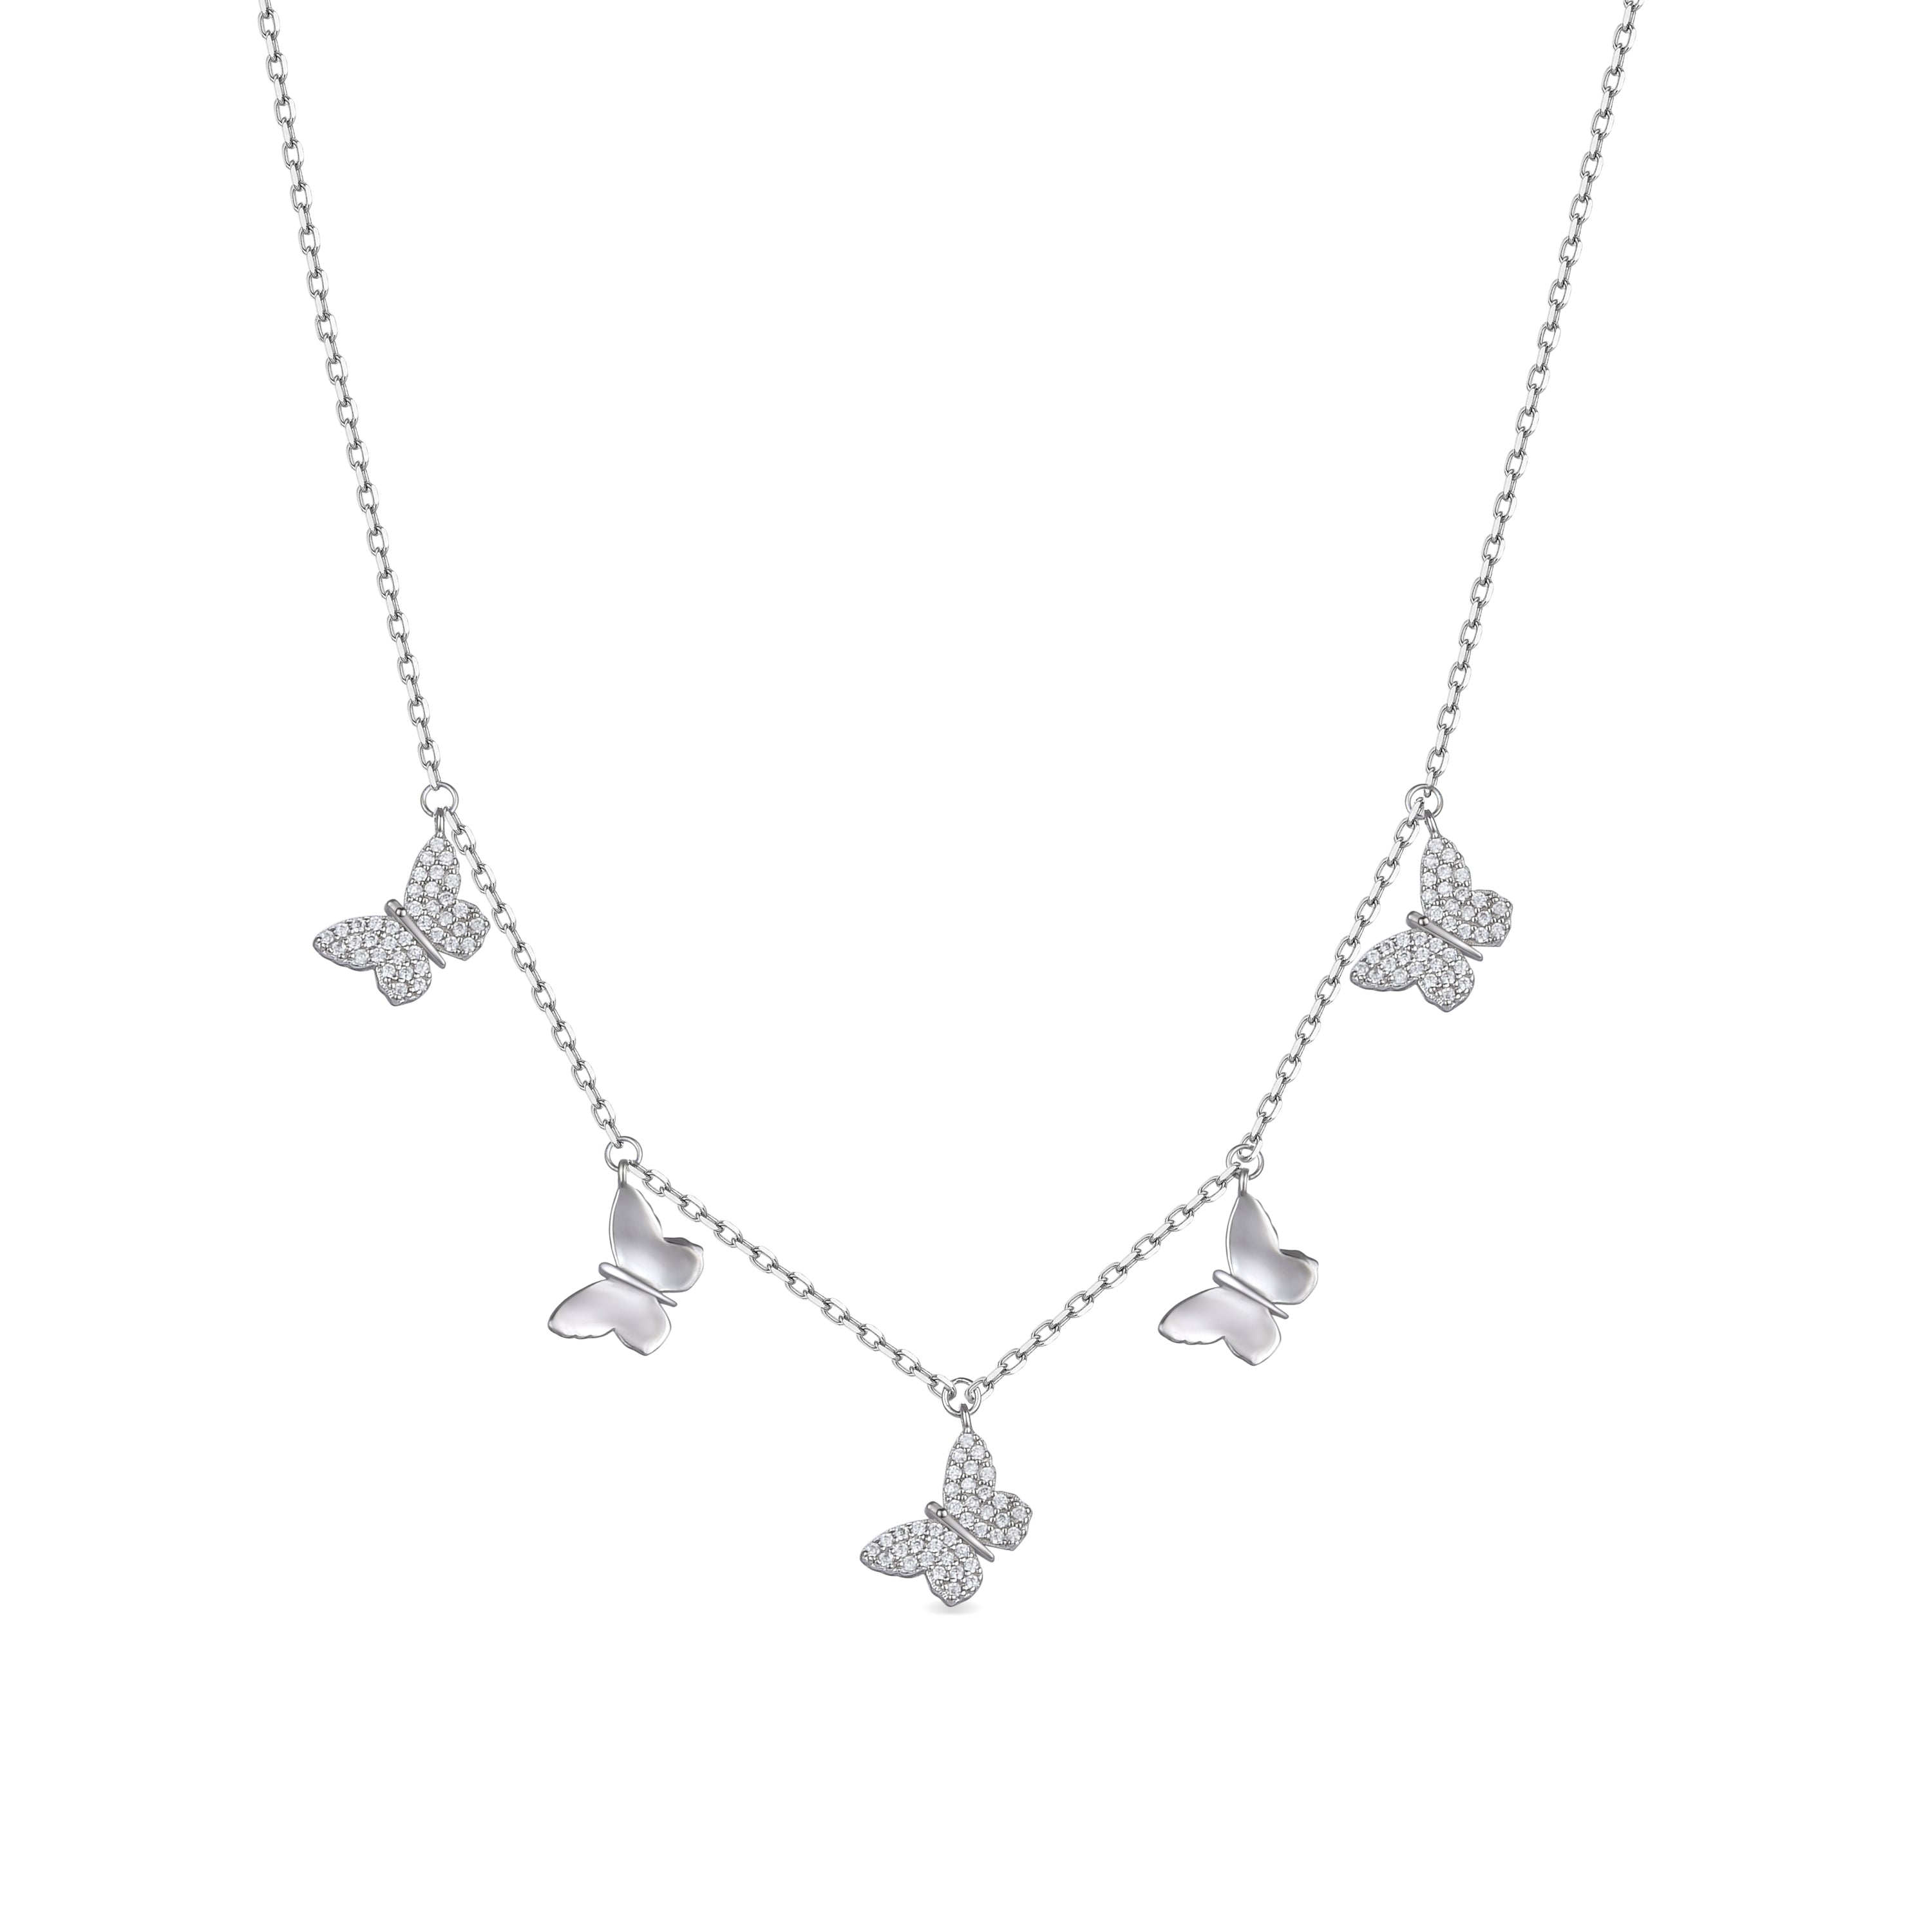 Hewda 925 Sterling Silver Necklace